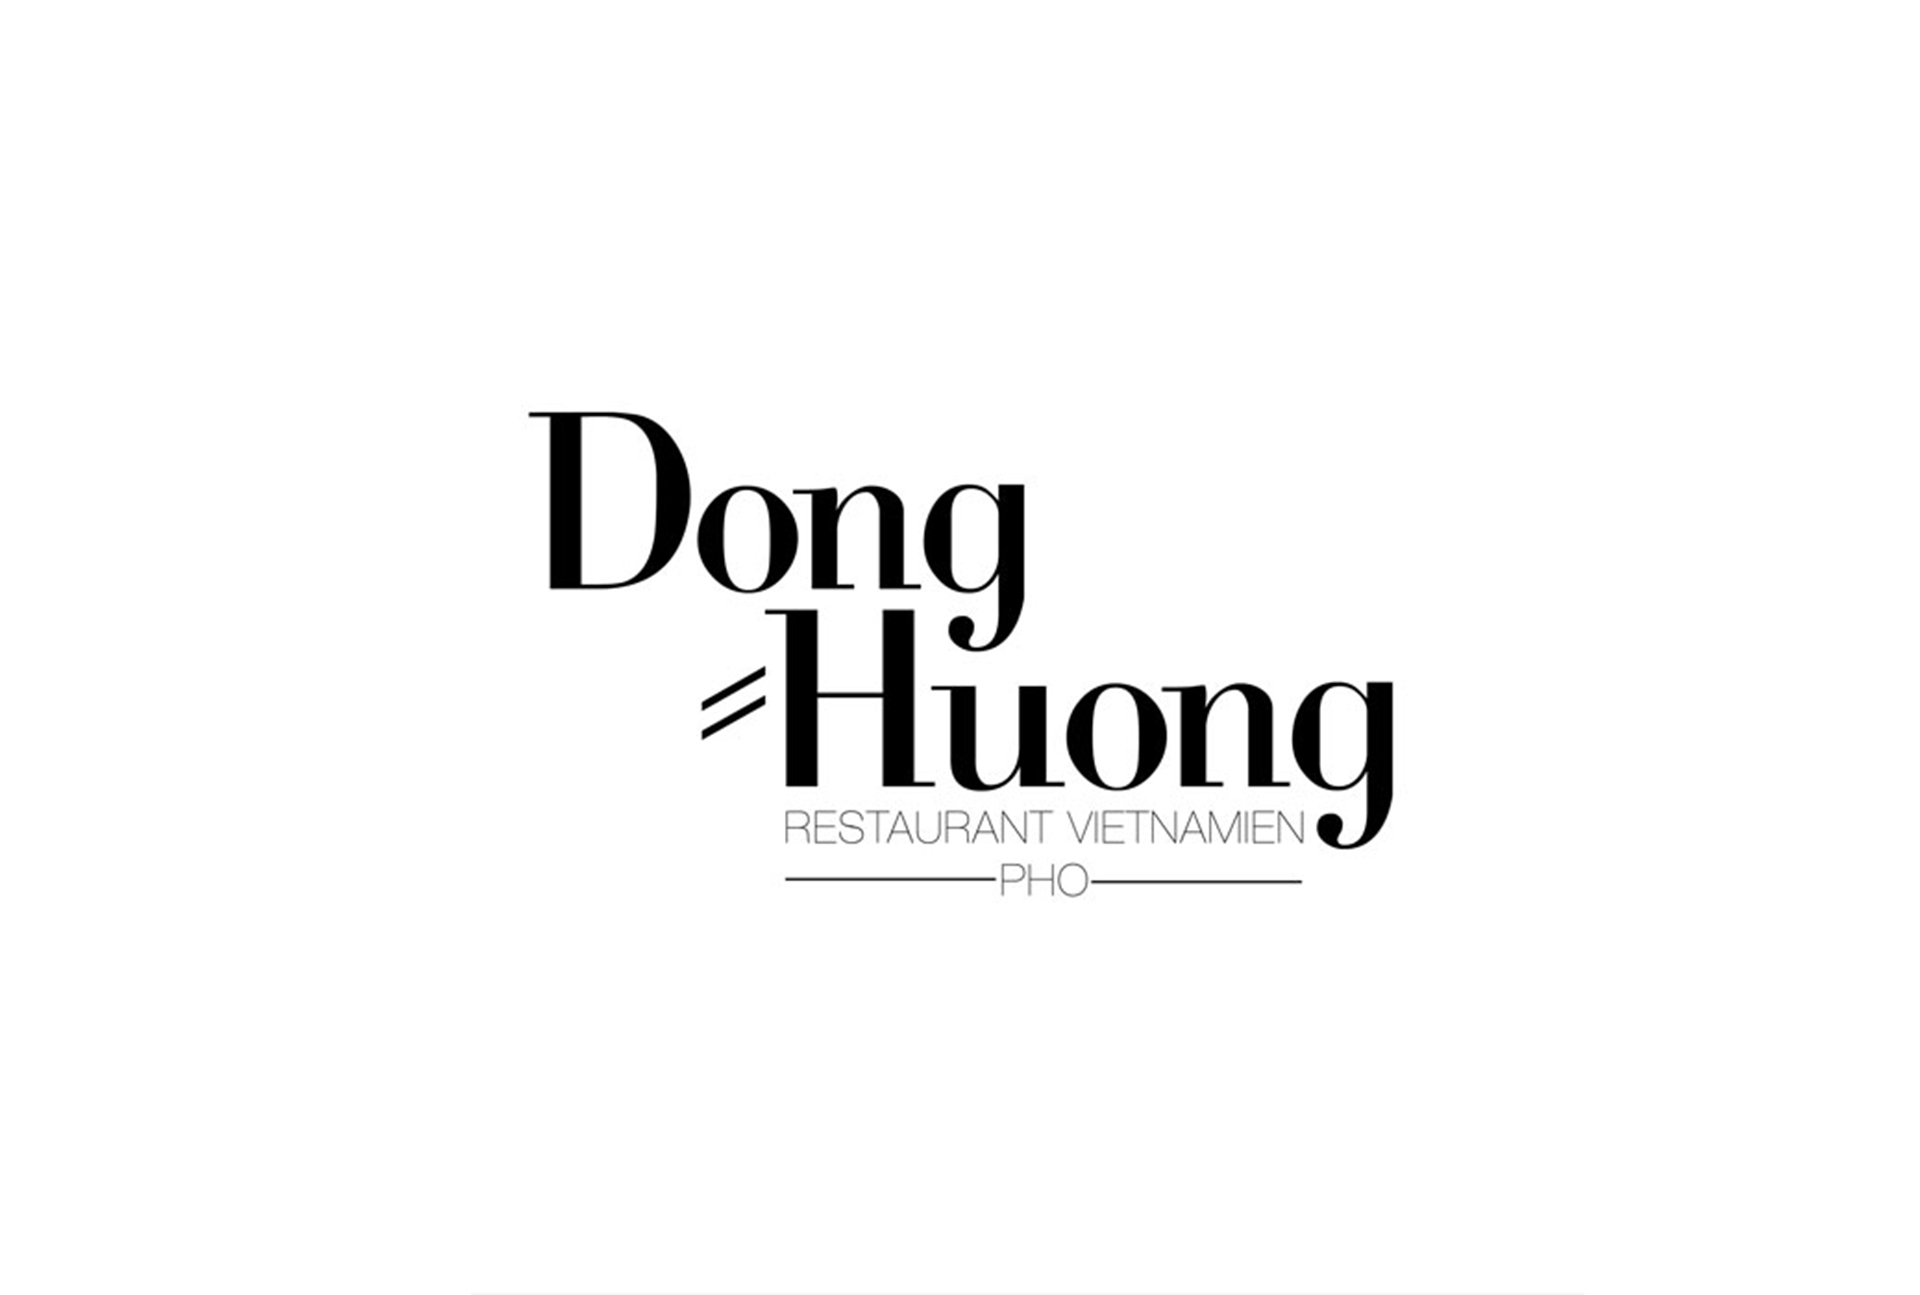 DONG HUONG